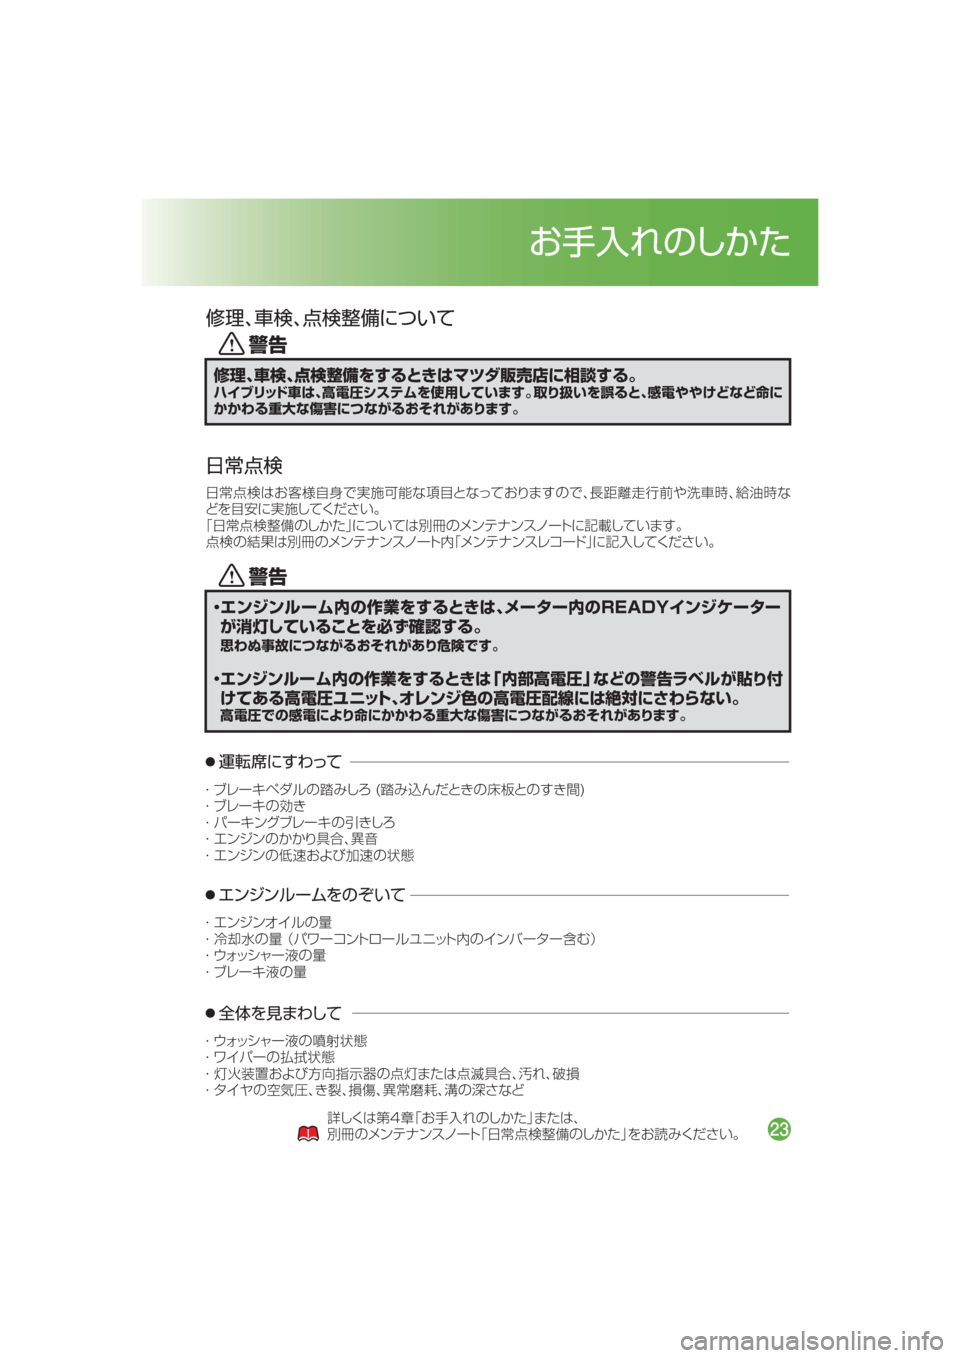 MAZDA MODEL AXELA HYBRID 2014  アクセラハイブリッド｜取扱説明書 (in Japanese) /
/
	.gJ	UJ:U
T
